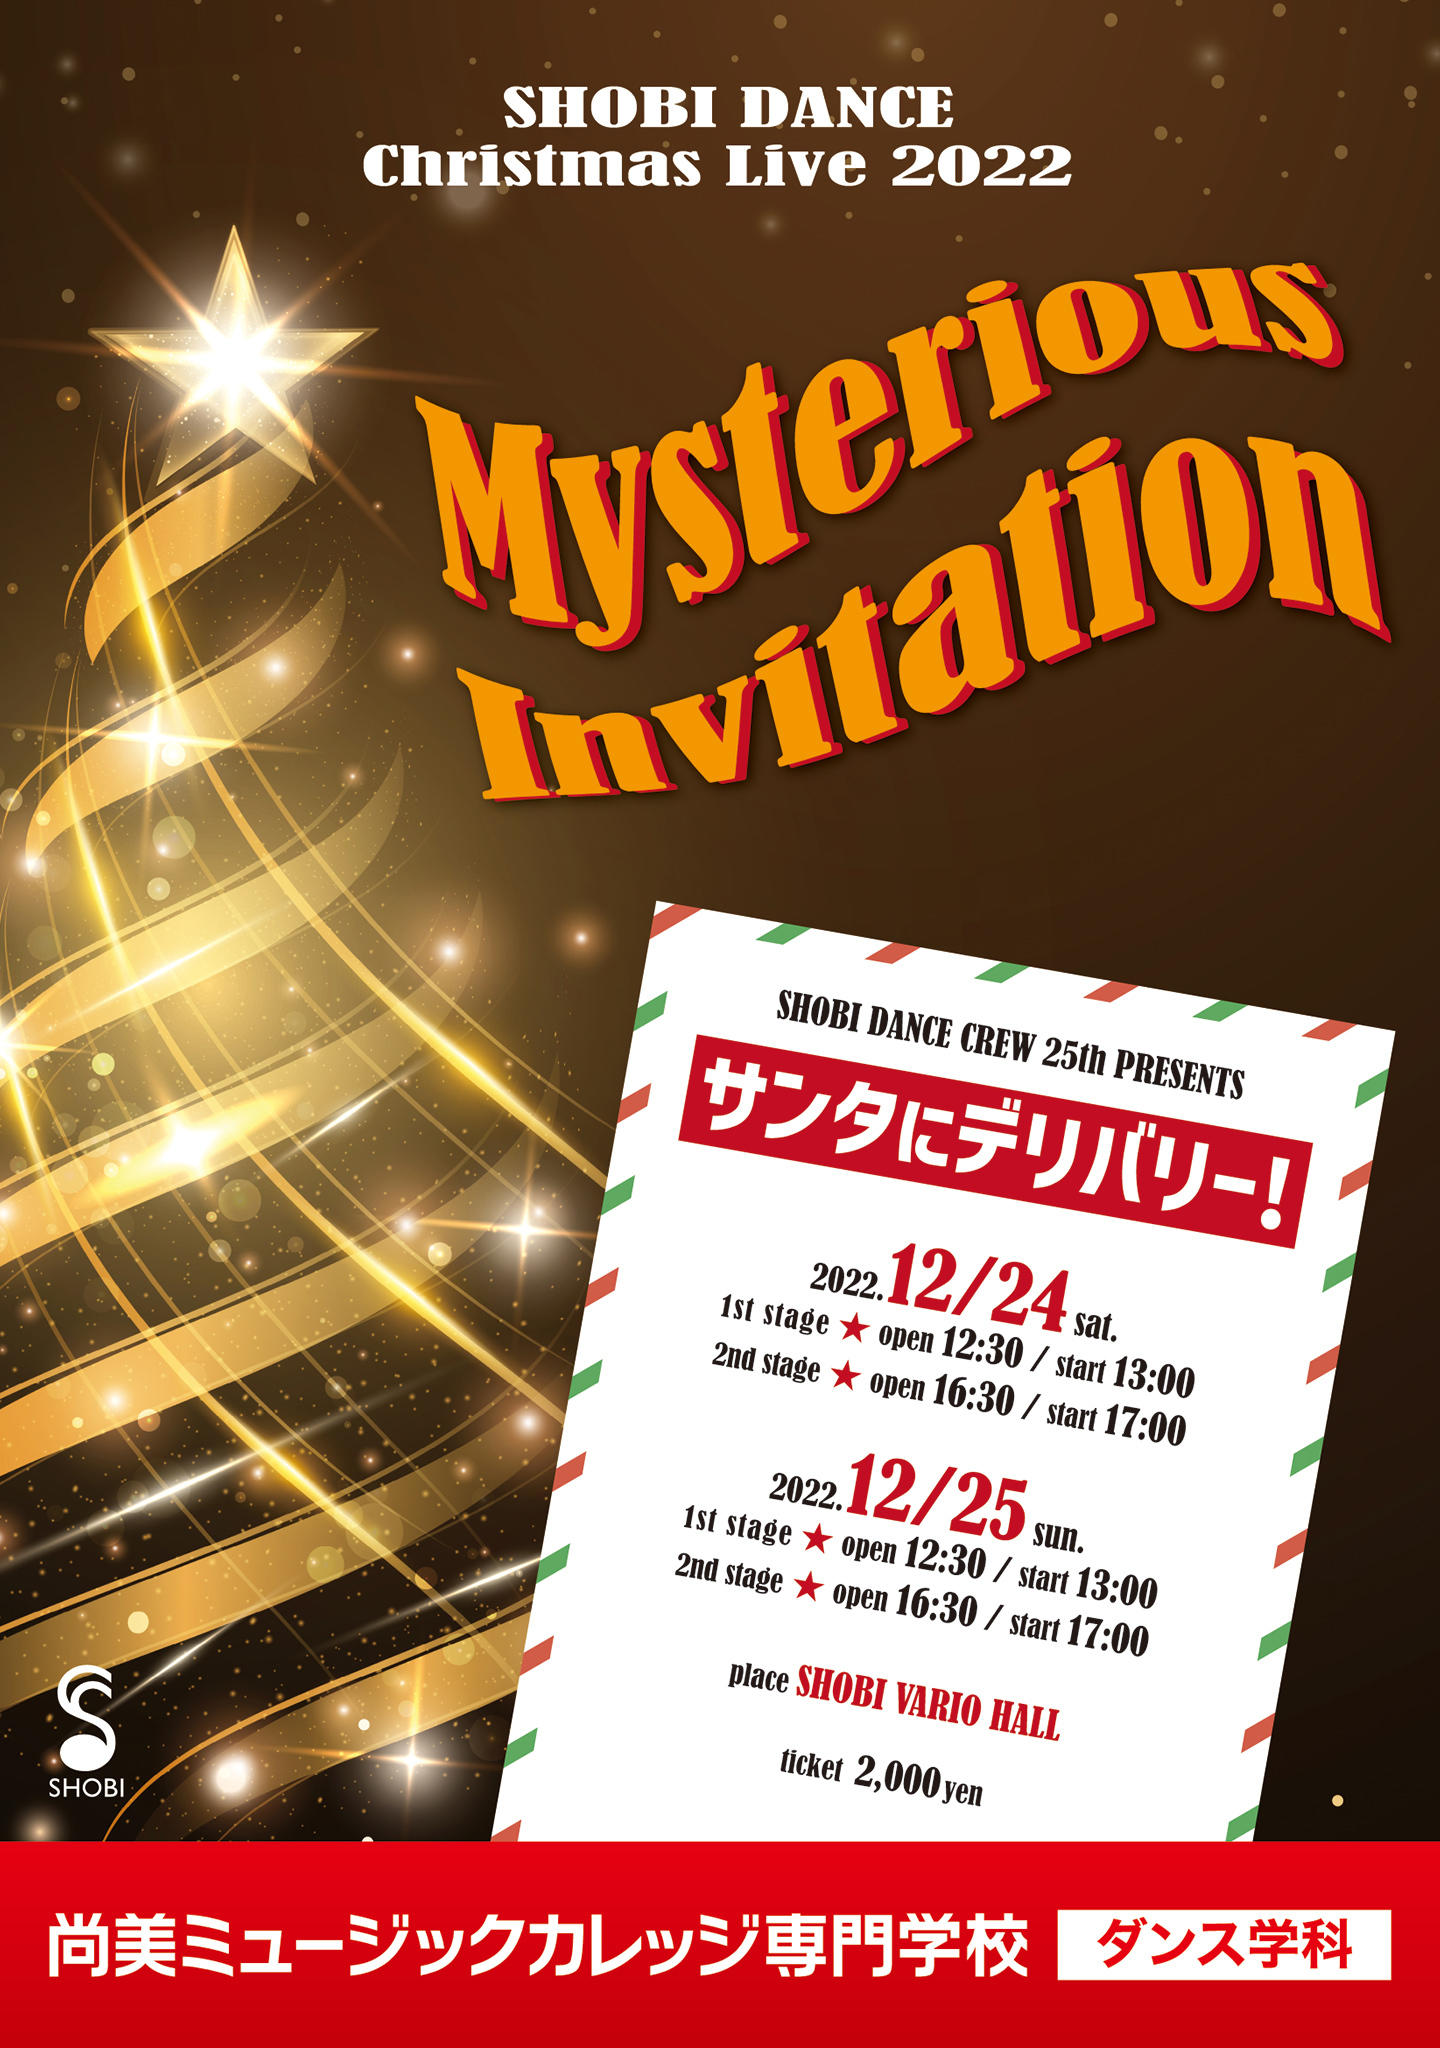 https://www.shobi.ac.jp/event/20221224-25_da_christmas-live_01.jpg